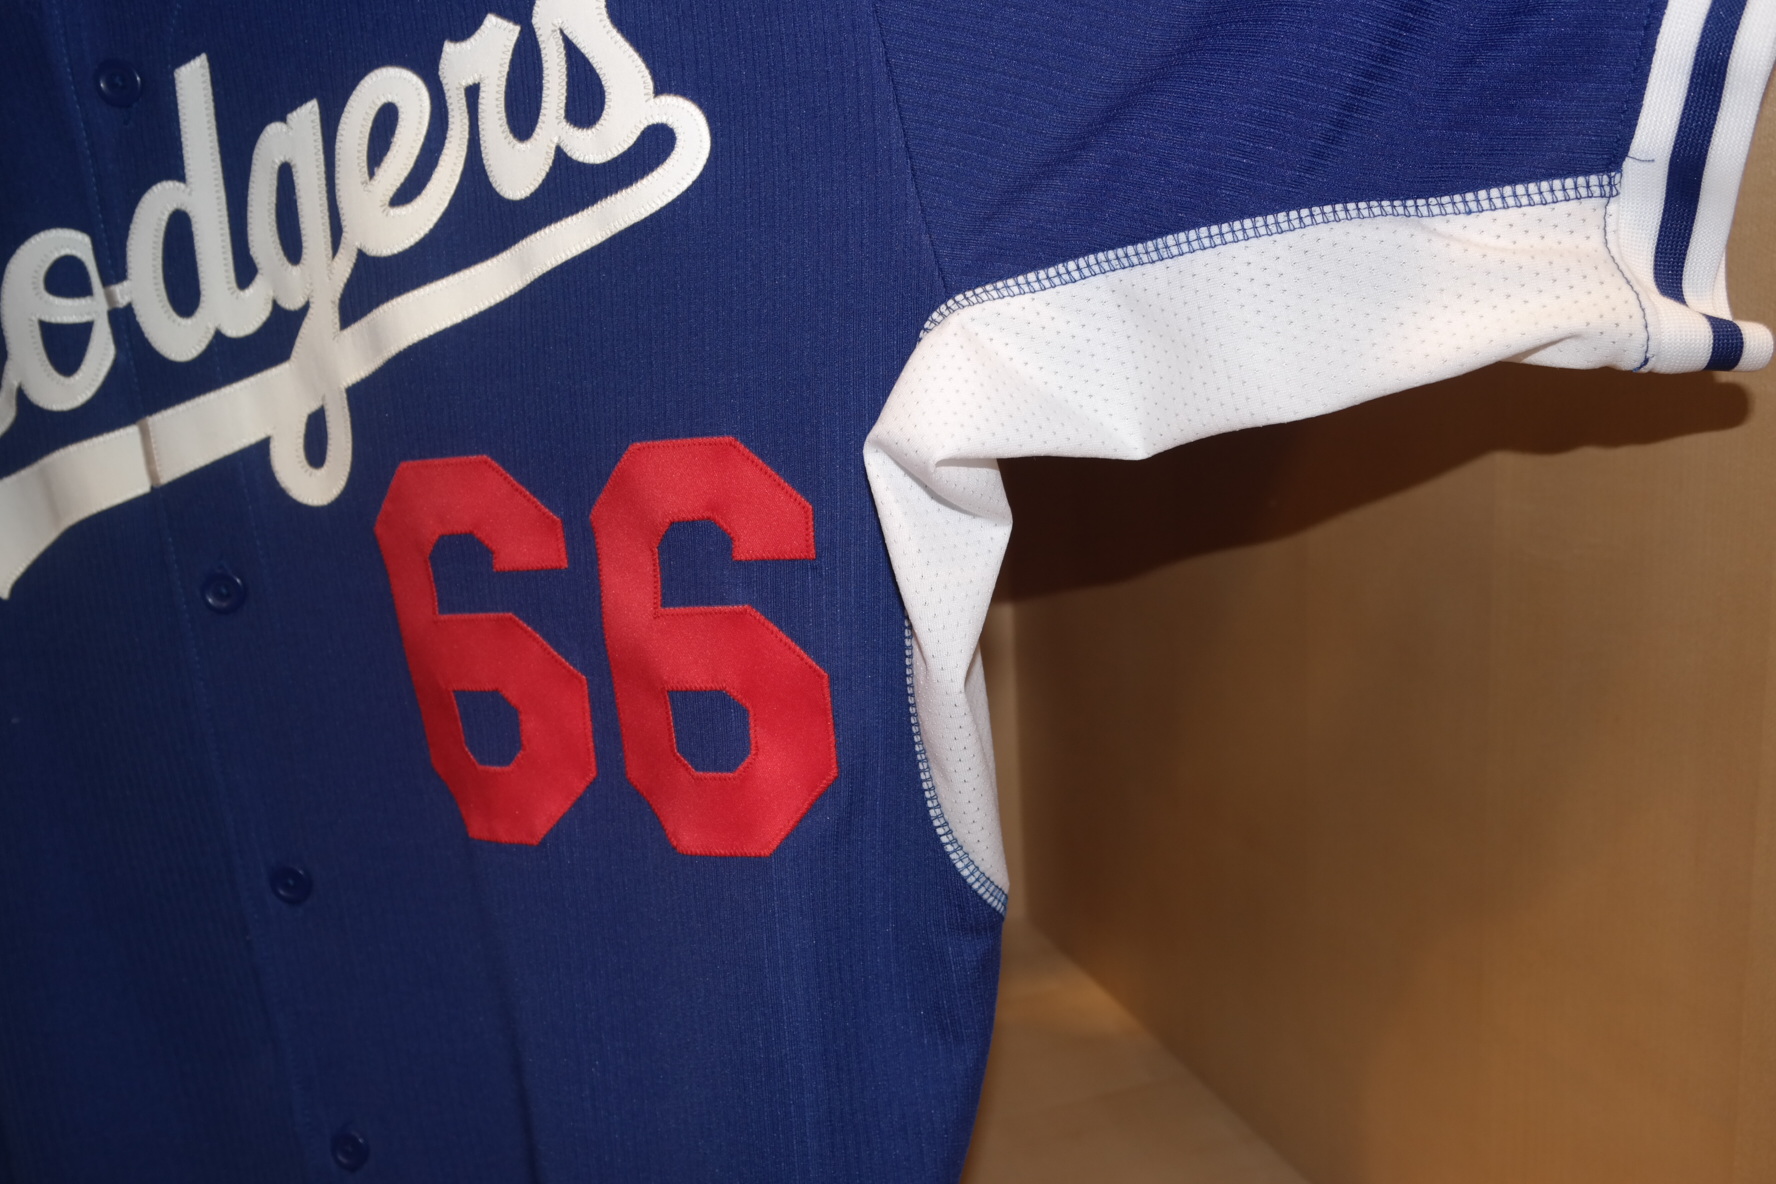 Introducing the Dodgers 2014 batting practice jerseys